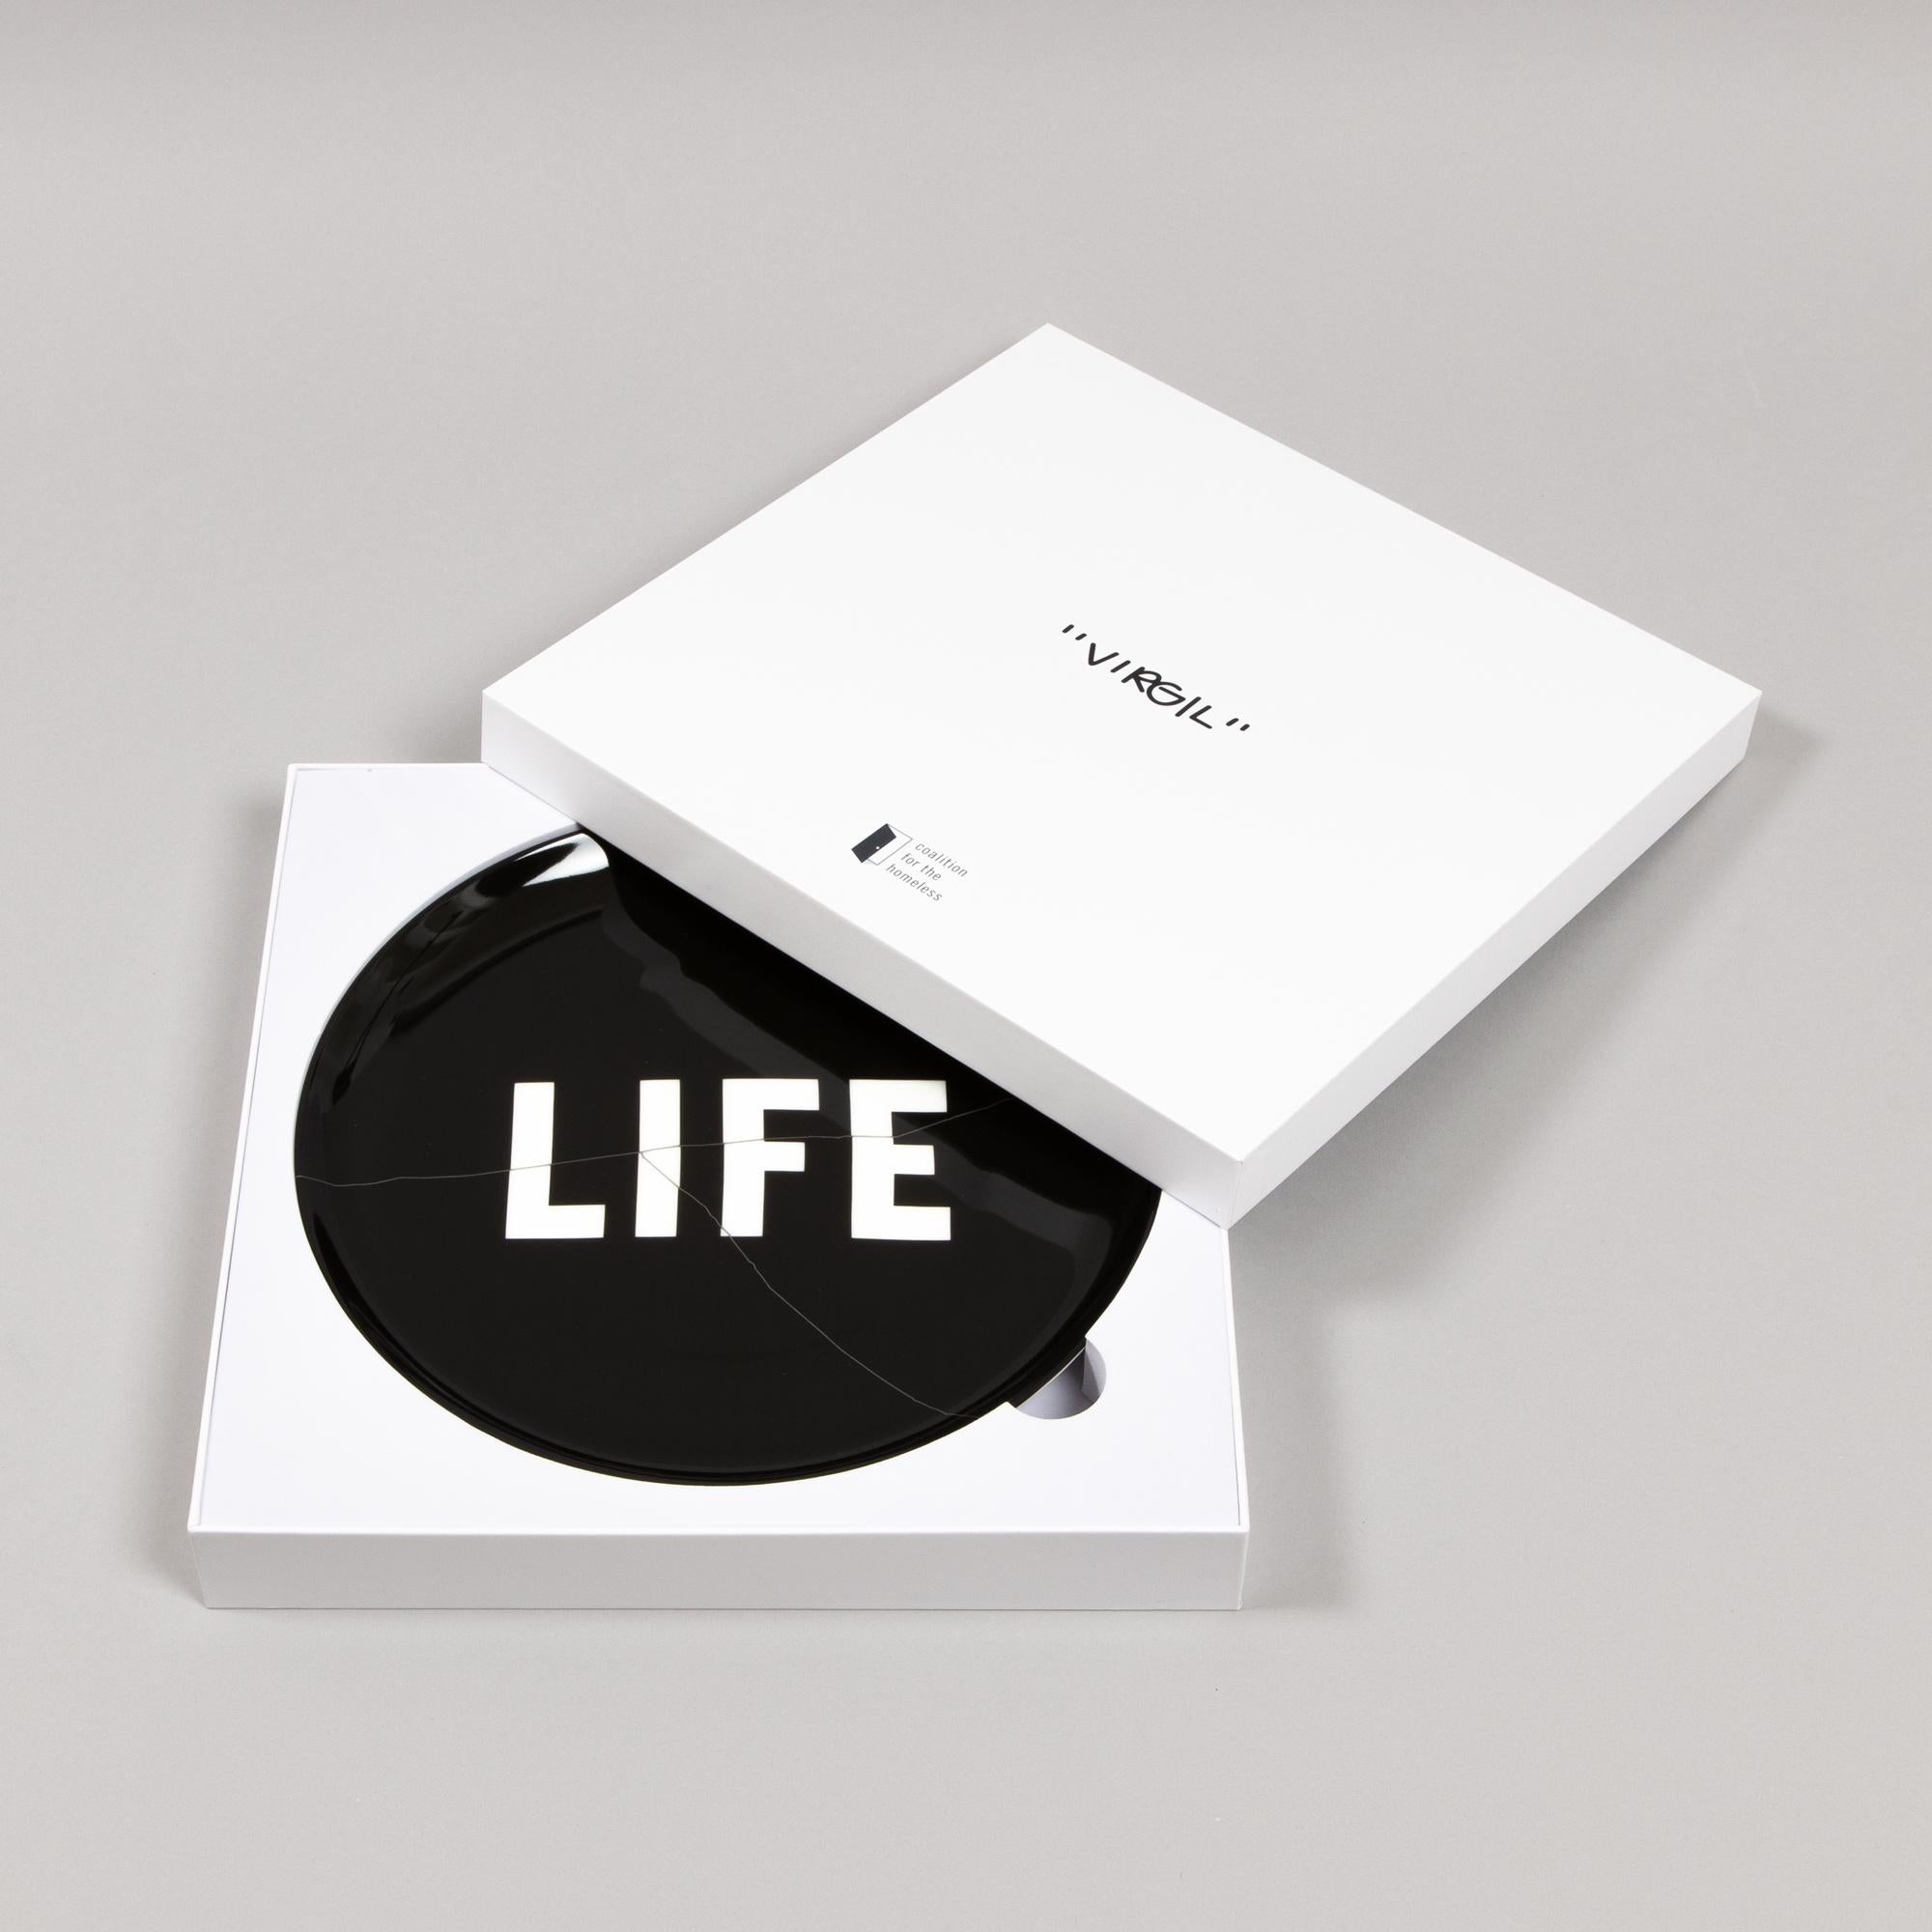 Virgil Abloh, Life Itself - Platte in limitierter Auflage, Contemporary Art im Angebot 2